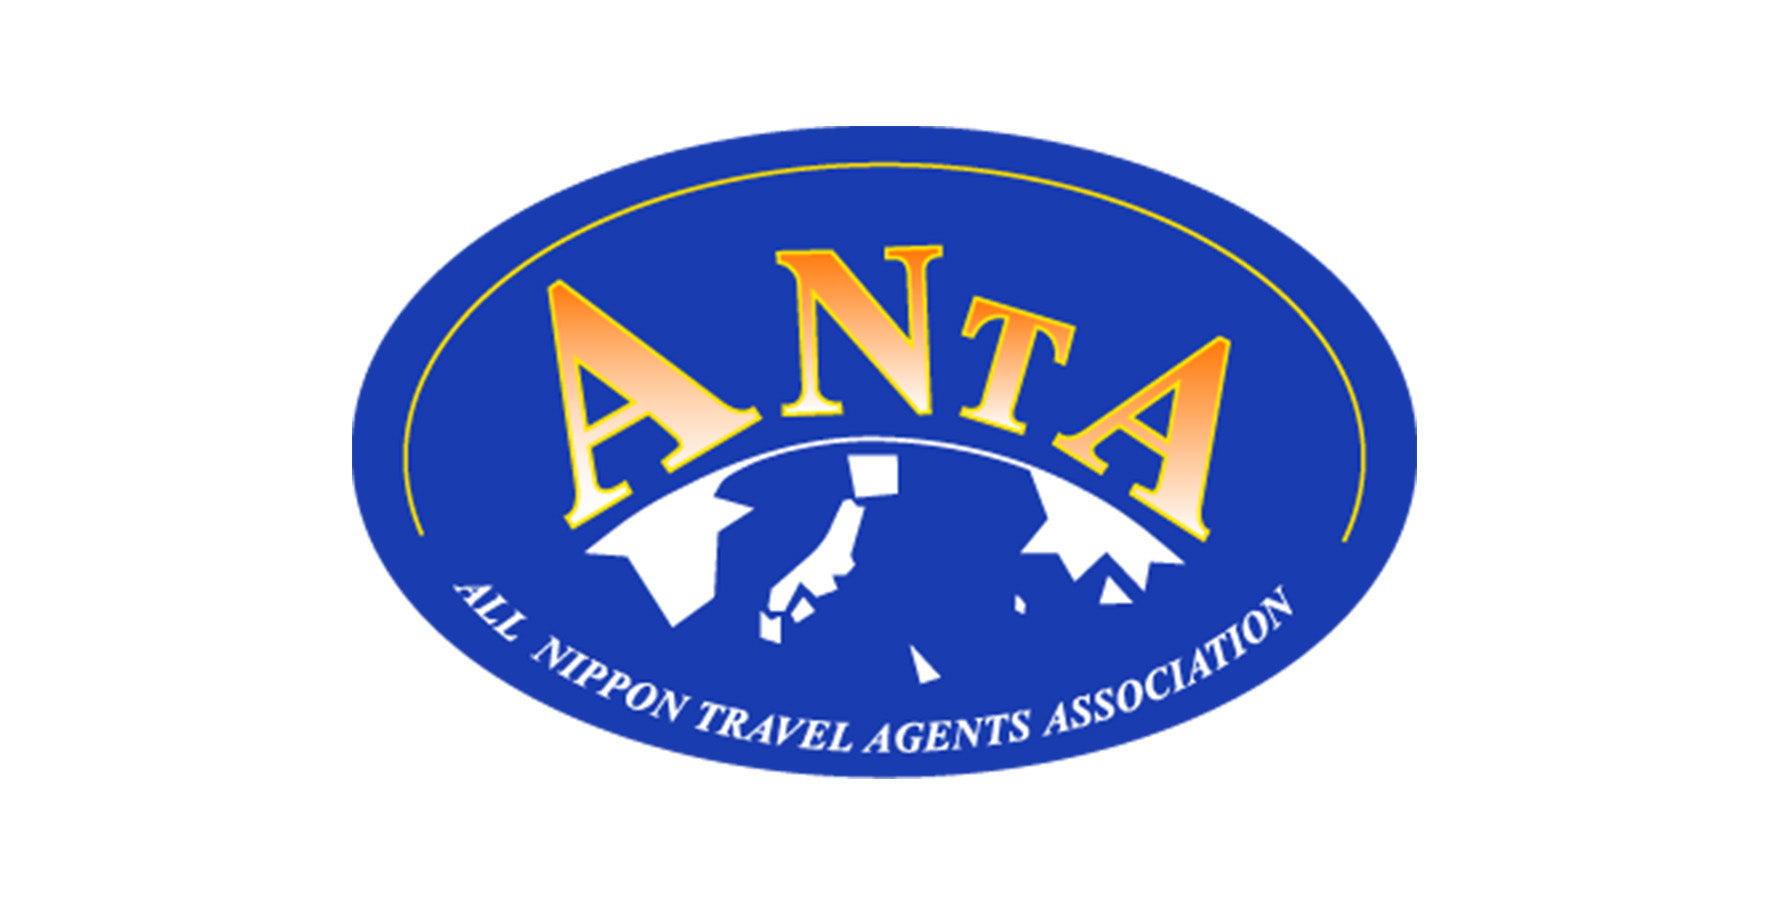 anta travel group